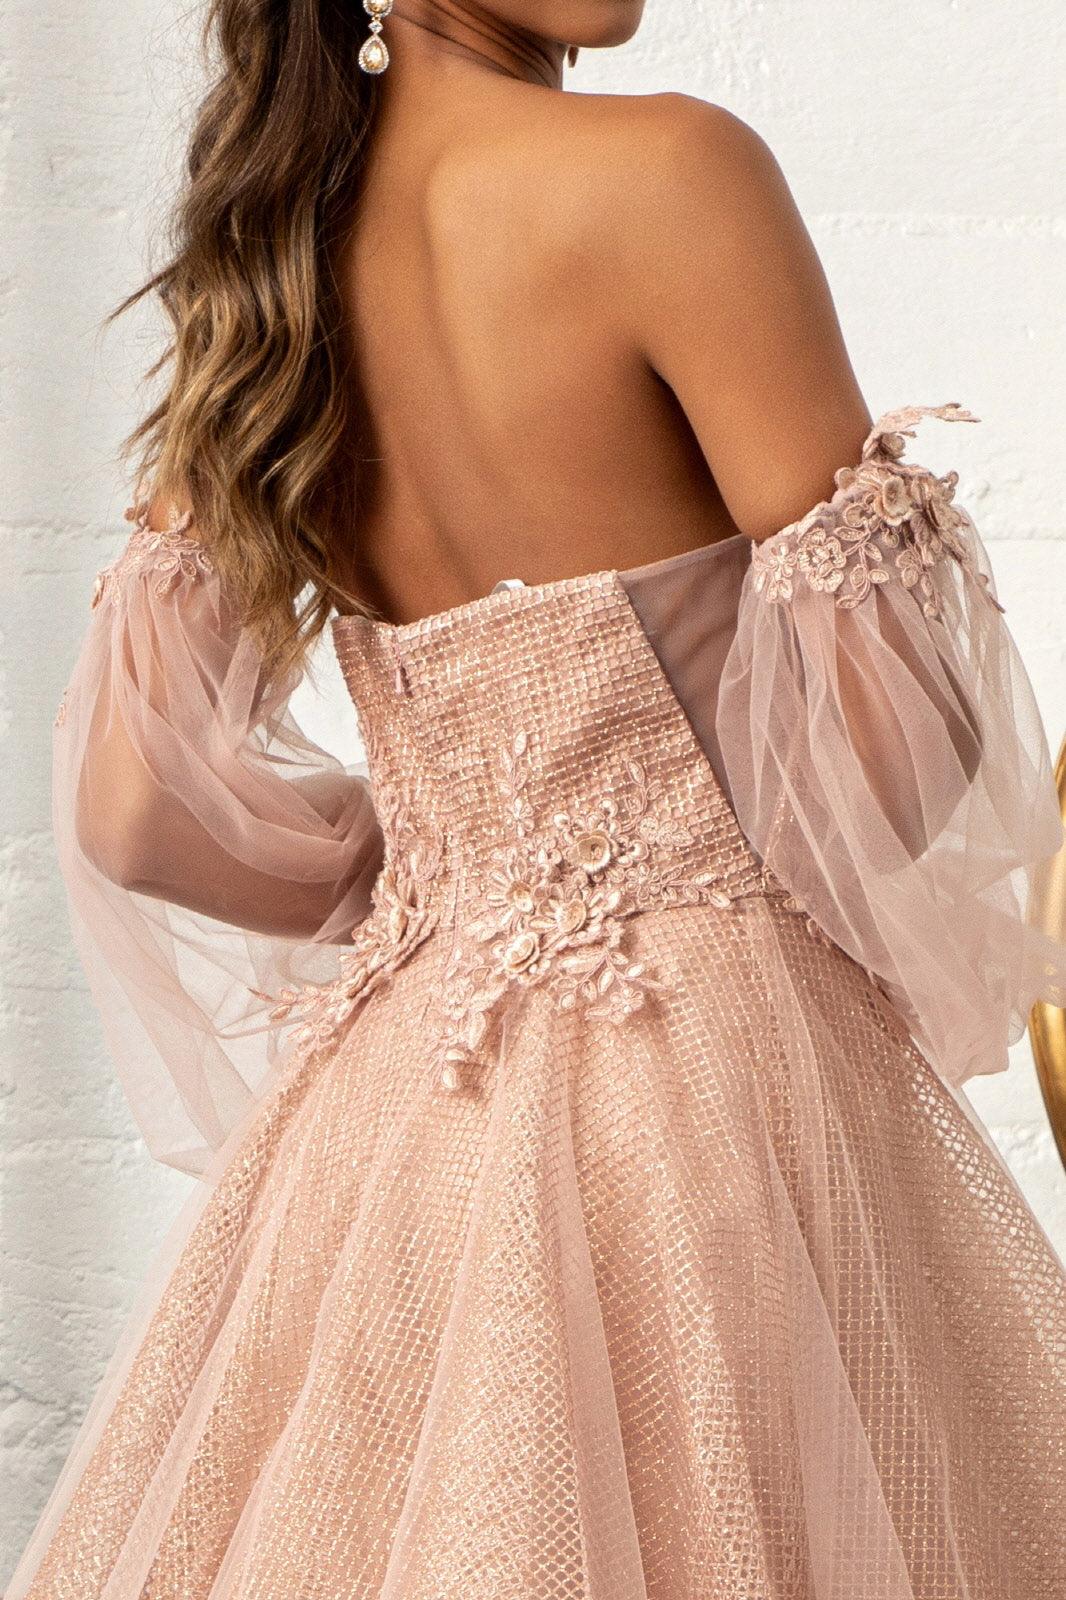 Long Formal Glitter Evening Prom Dress - The Dress Outlet